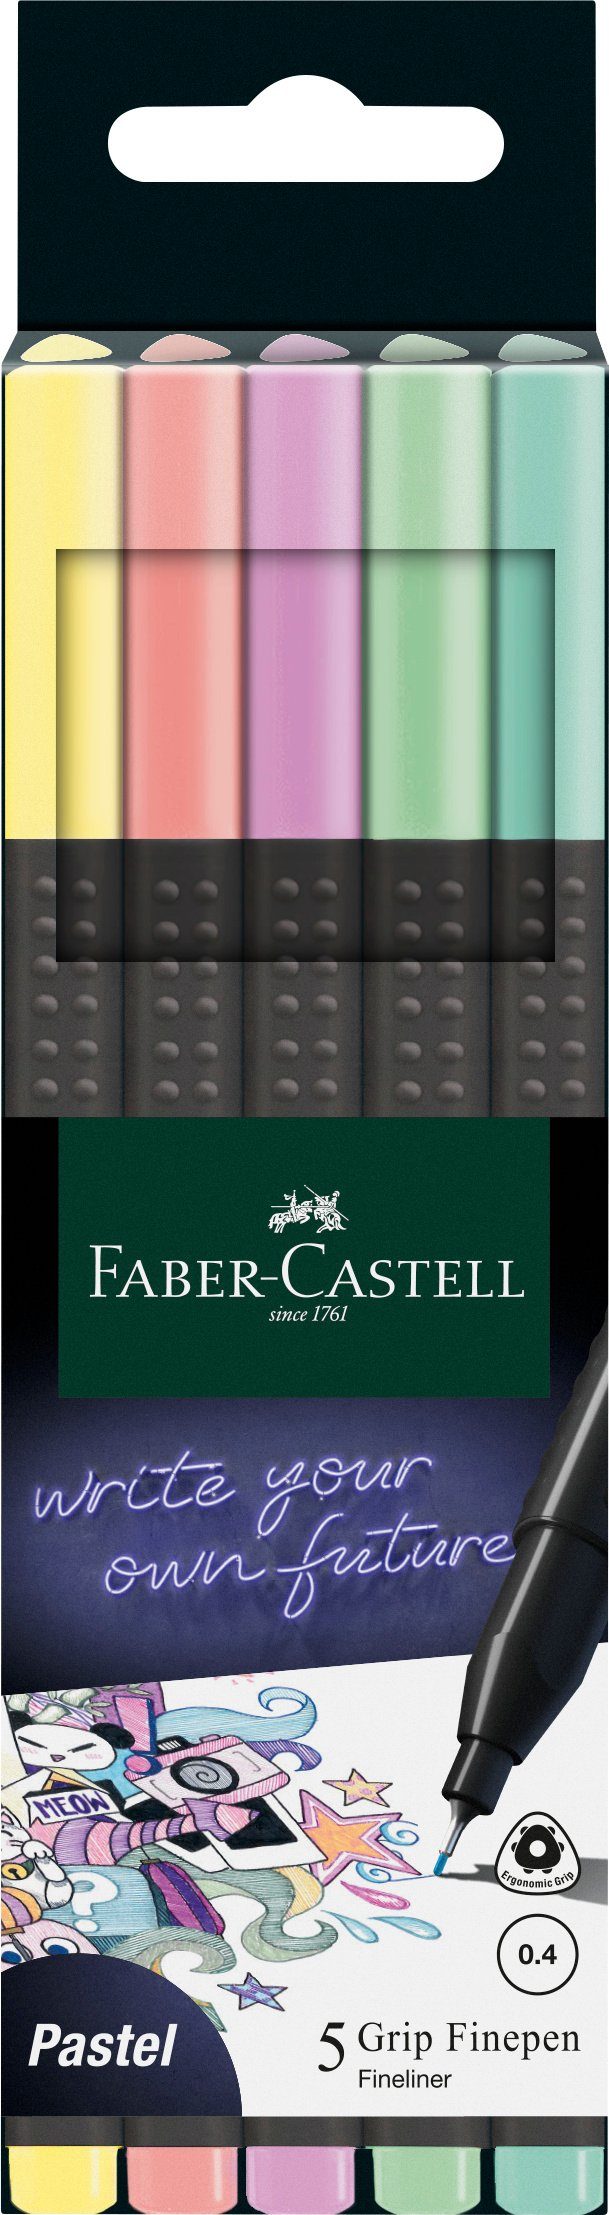 DE Fineliner Finepen pastell 5x Grip Faber-Castell